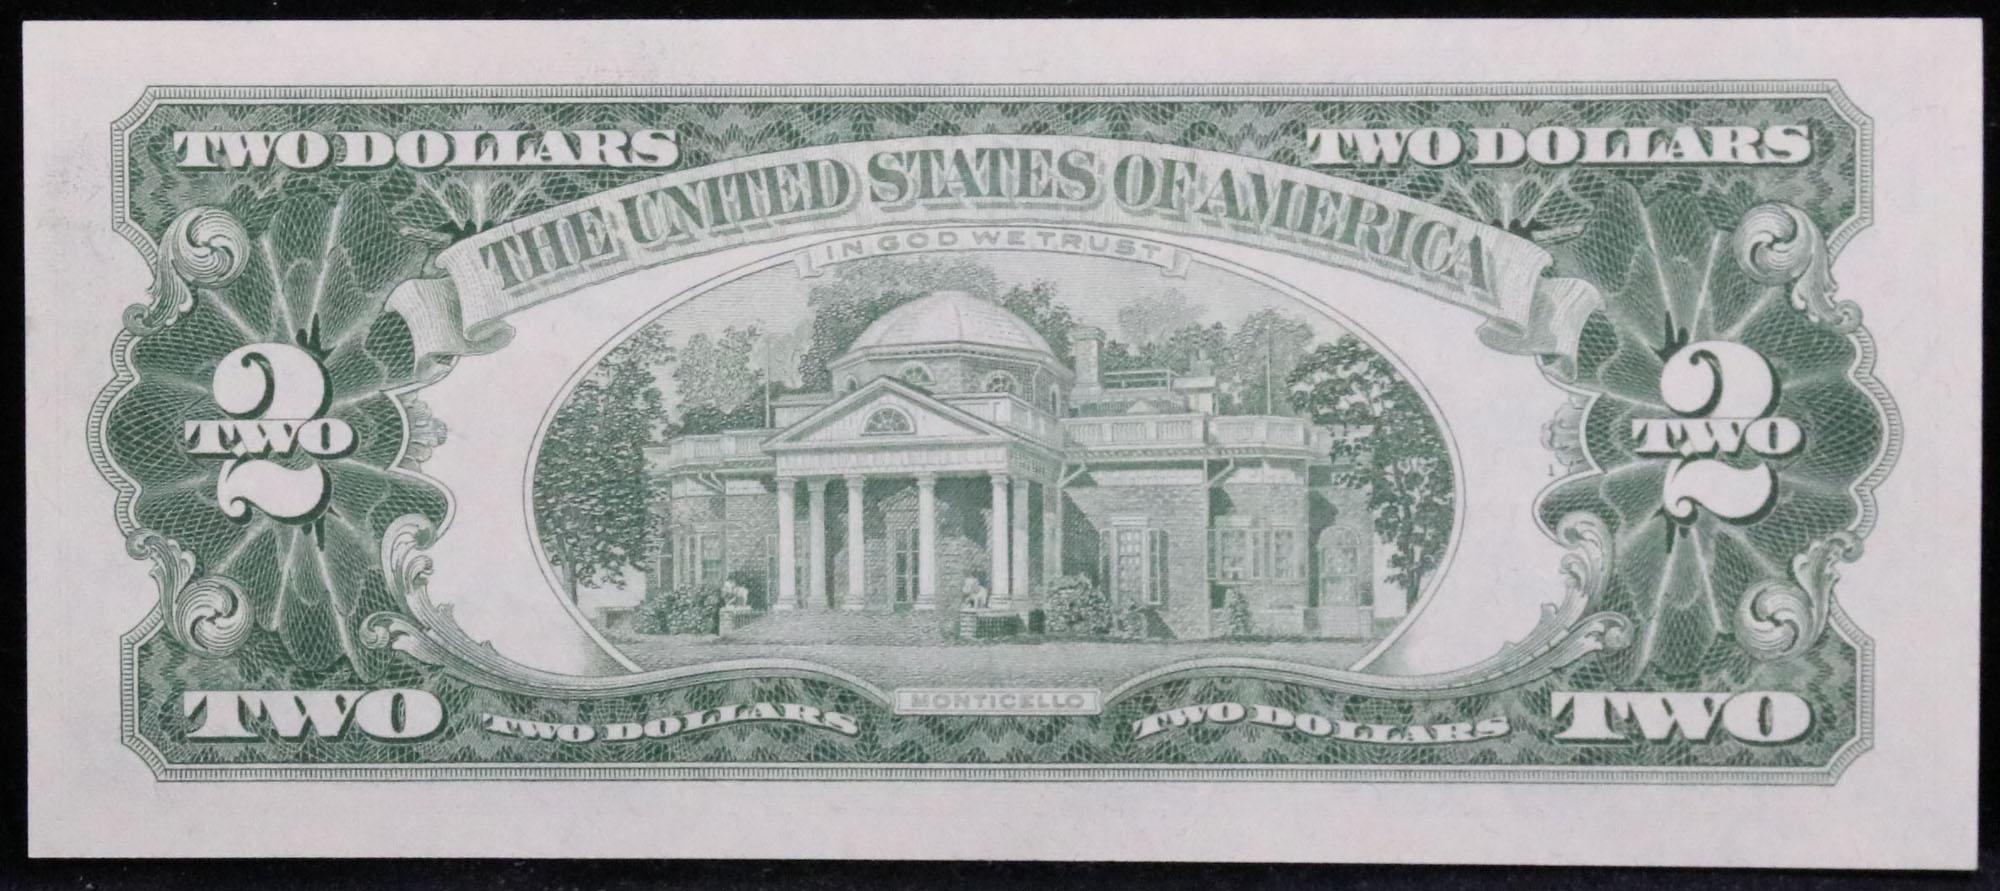 1963 $2 Red Seal United States Note Grades Gem++ CU